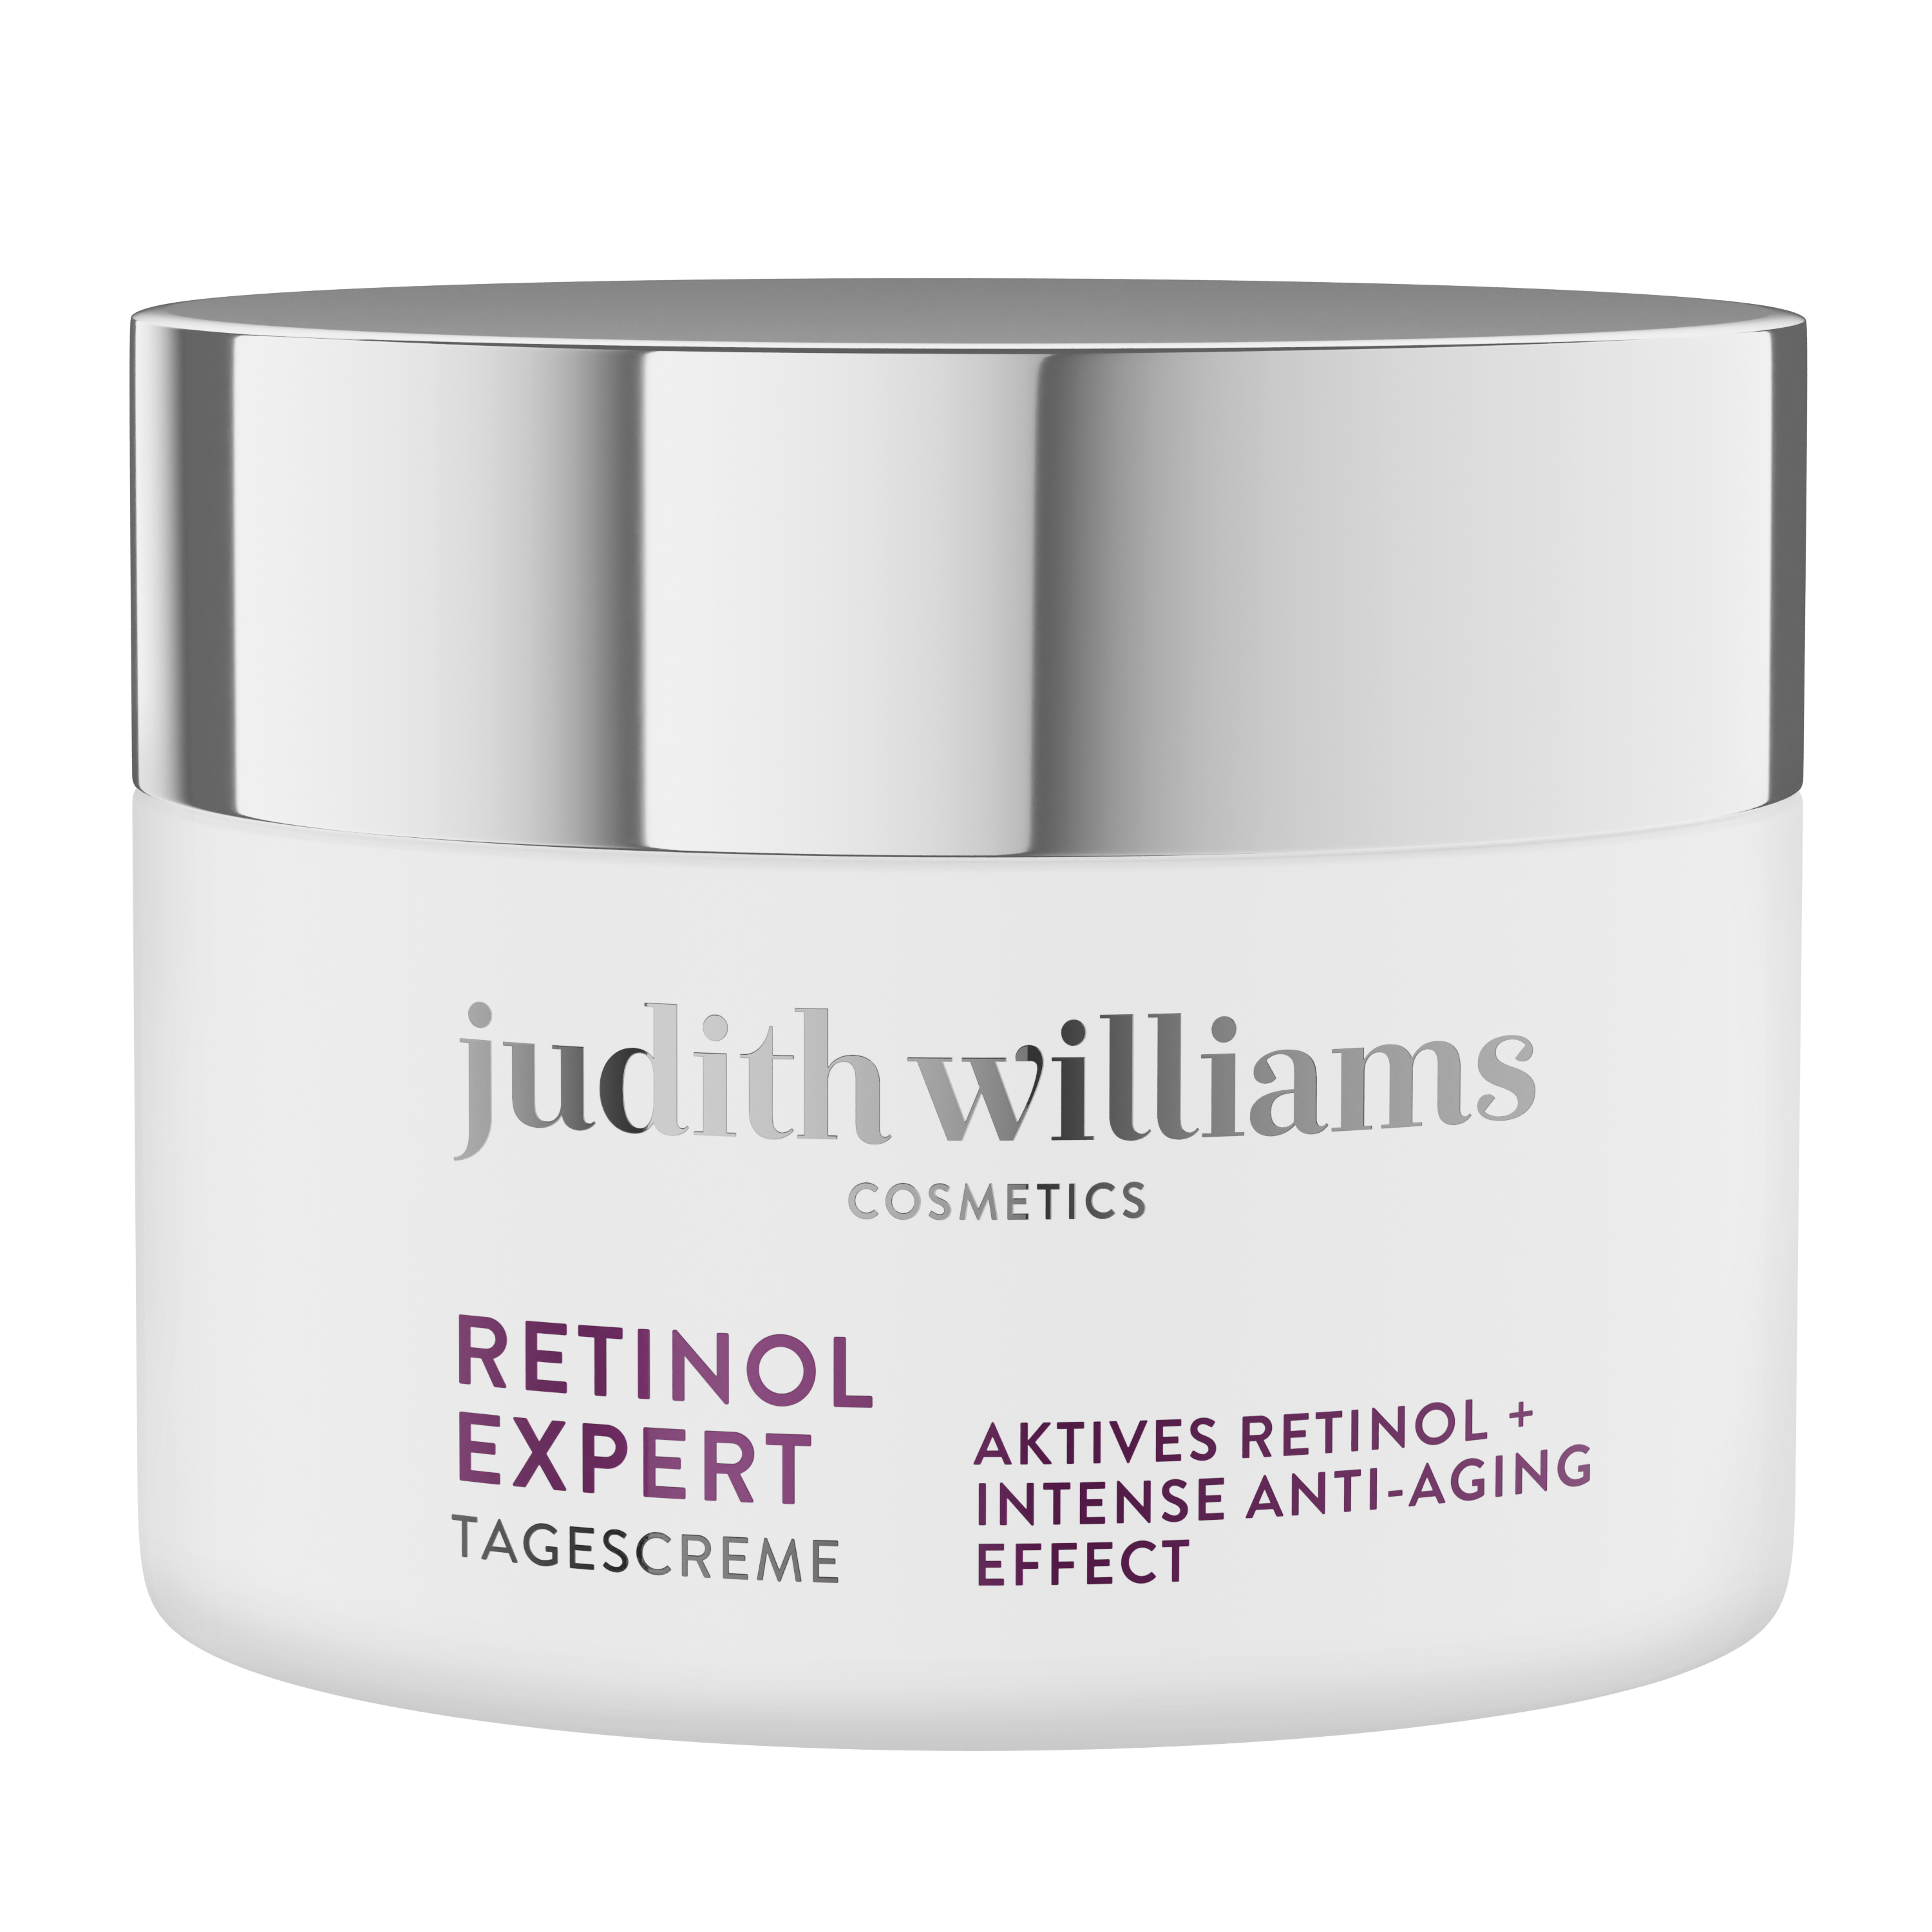 Gesichtscreme | Retinol Expert | Tagescreme | Judith Williams